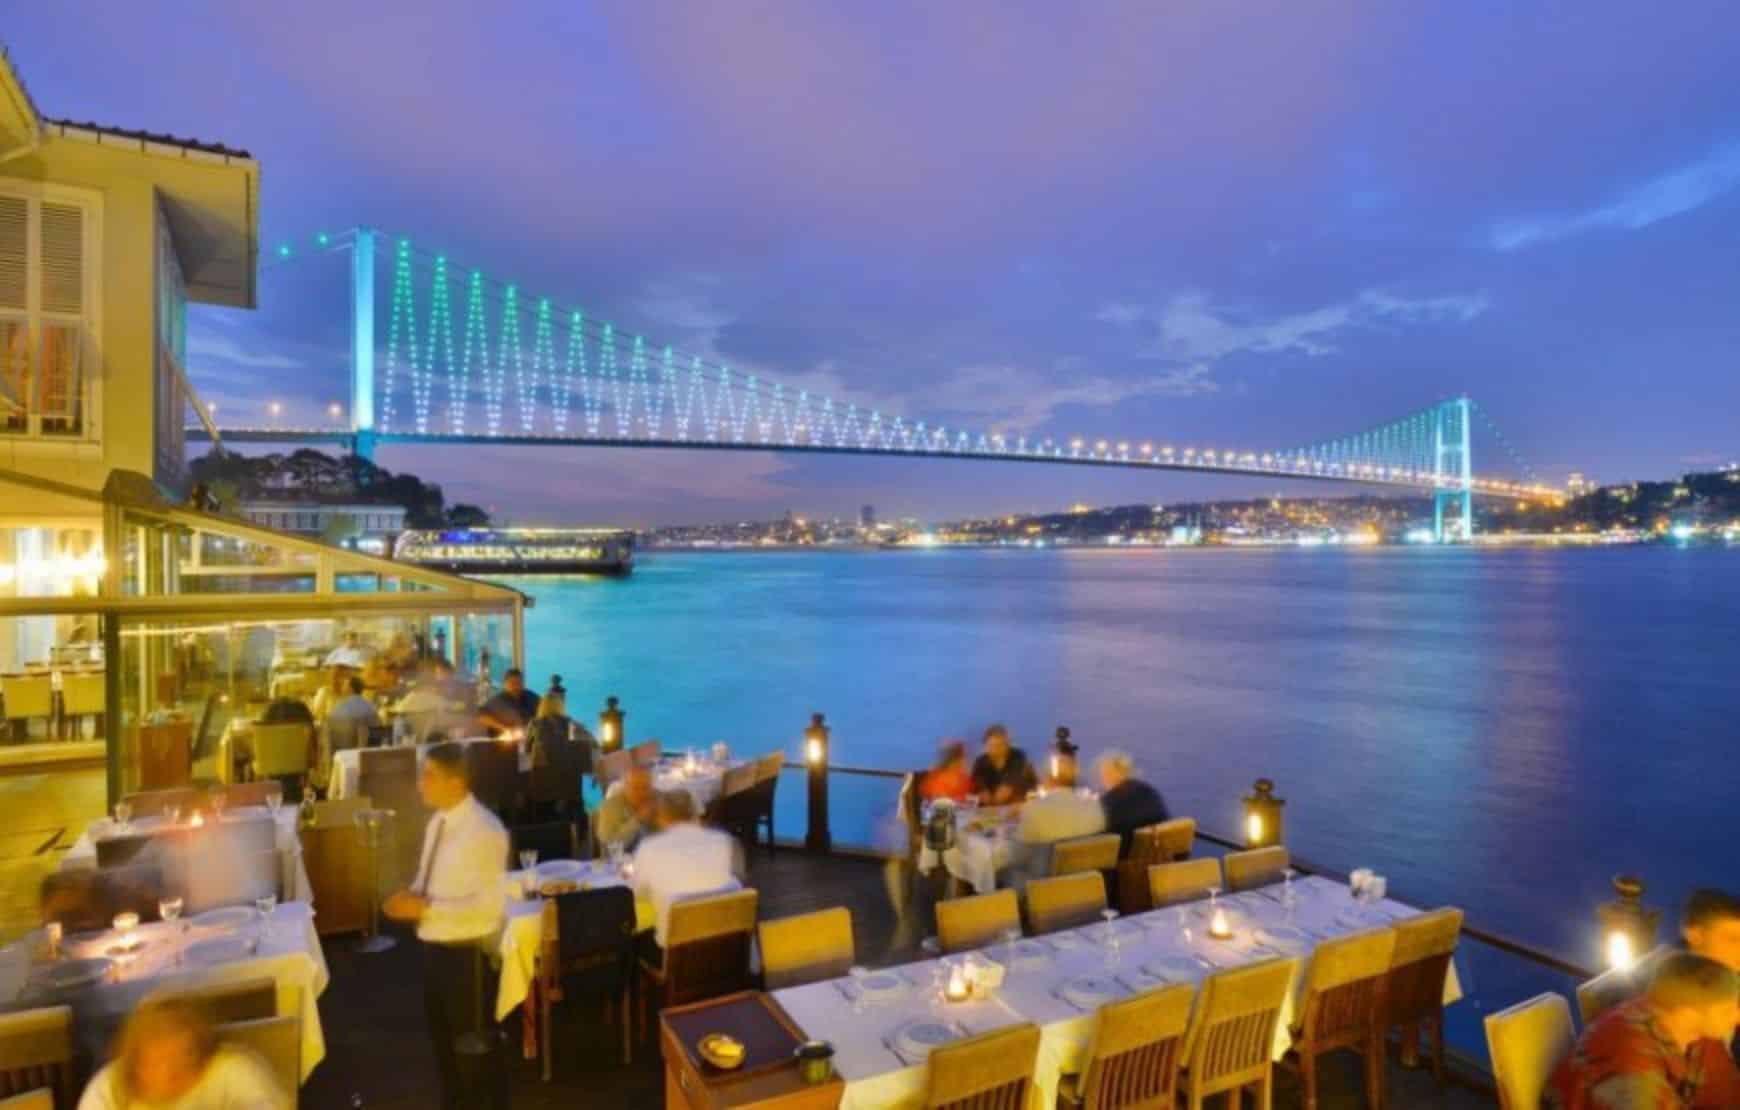 A nice restaurant next to Bosphorus